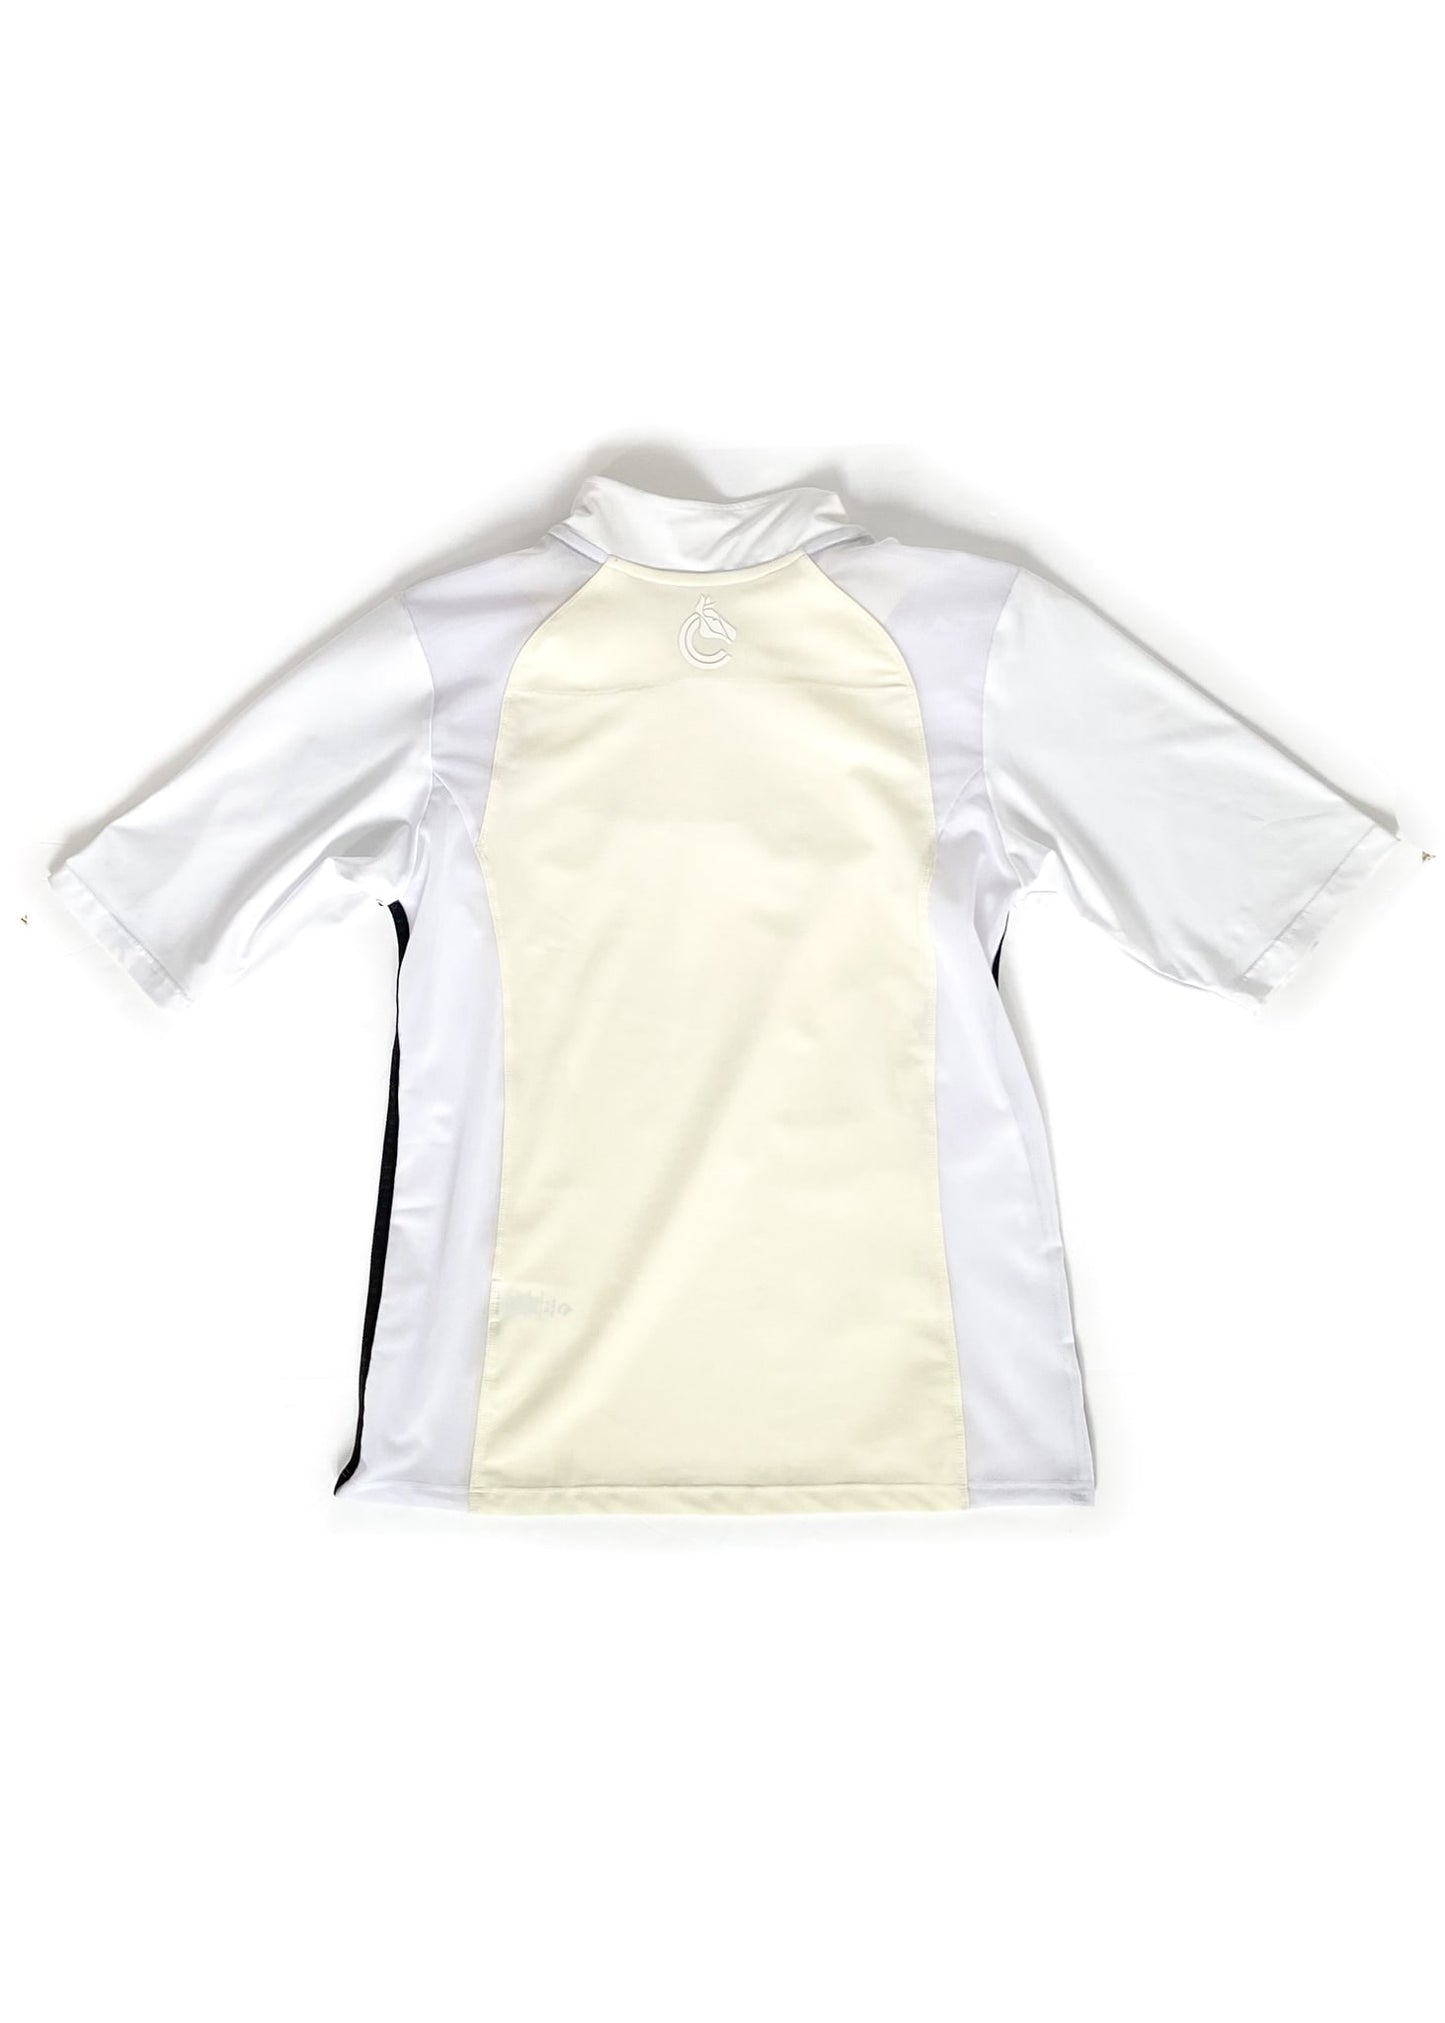 Criniere Alex Schooling Shirt - Cream/White - XL